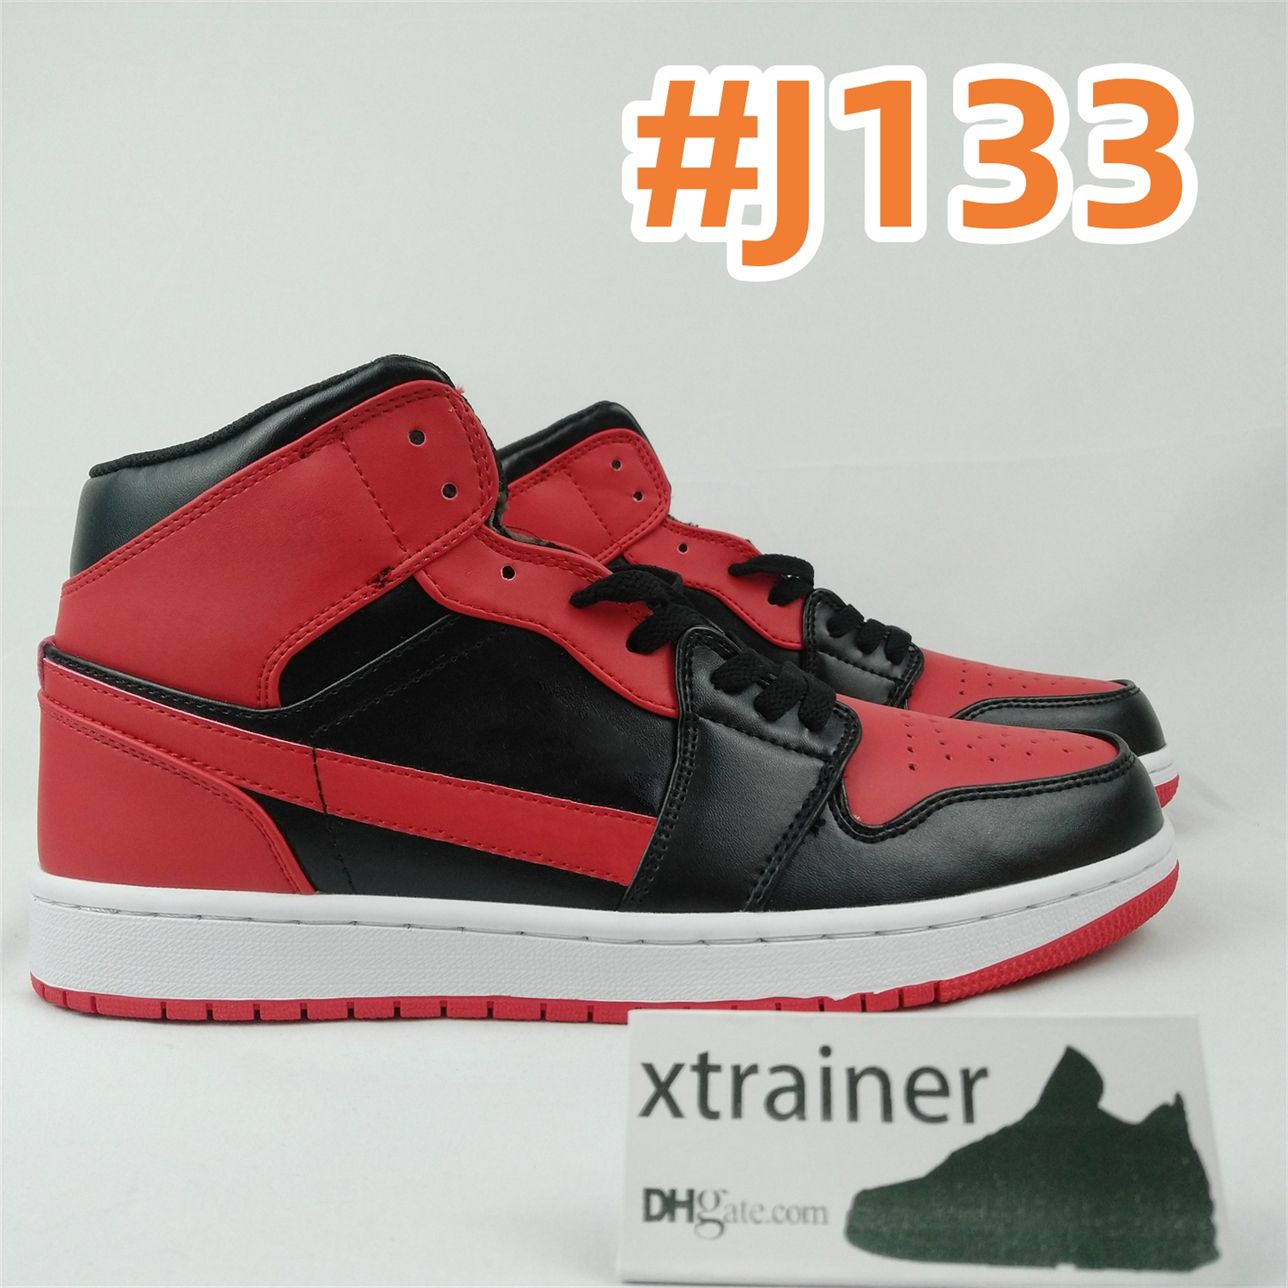 # J133